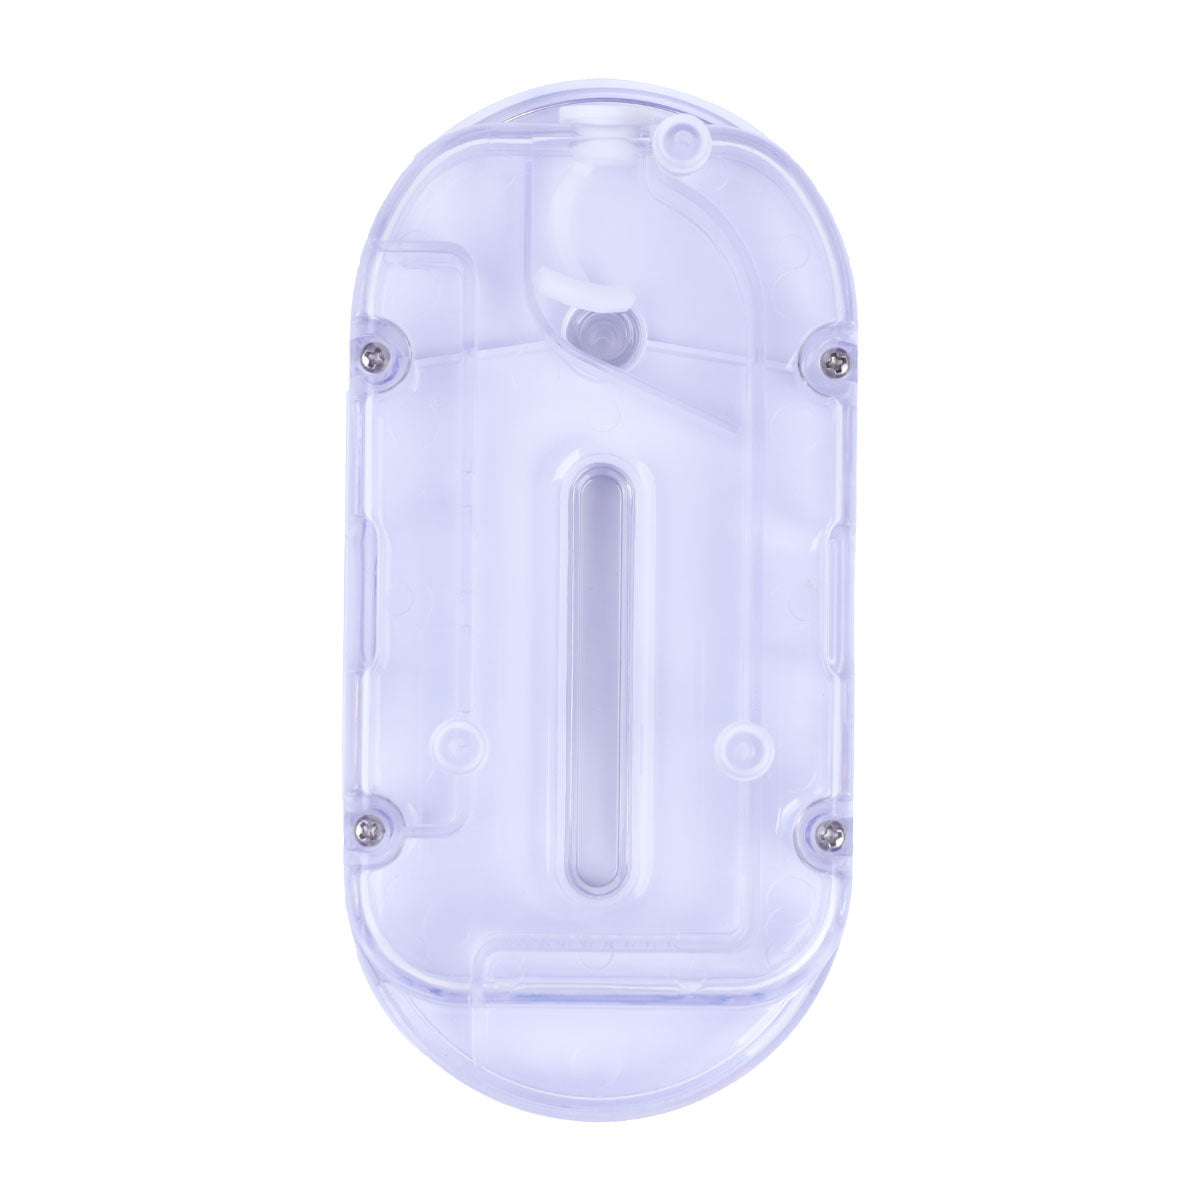 DEDAKJ Original Oxygen Accessories--Humidifier Water Tank for DE-Q1W (Original dedakj Accessory of Oxygen Concentrator)